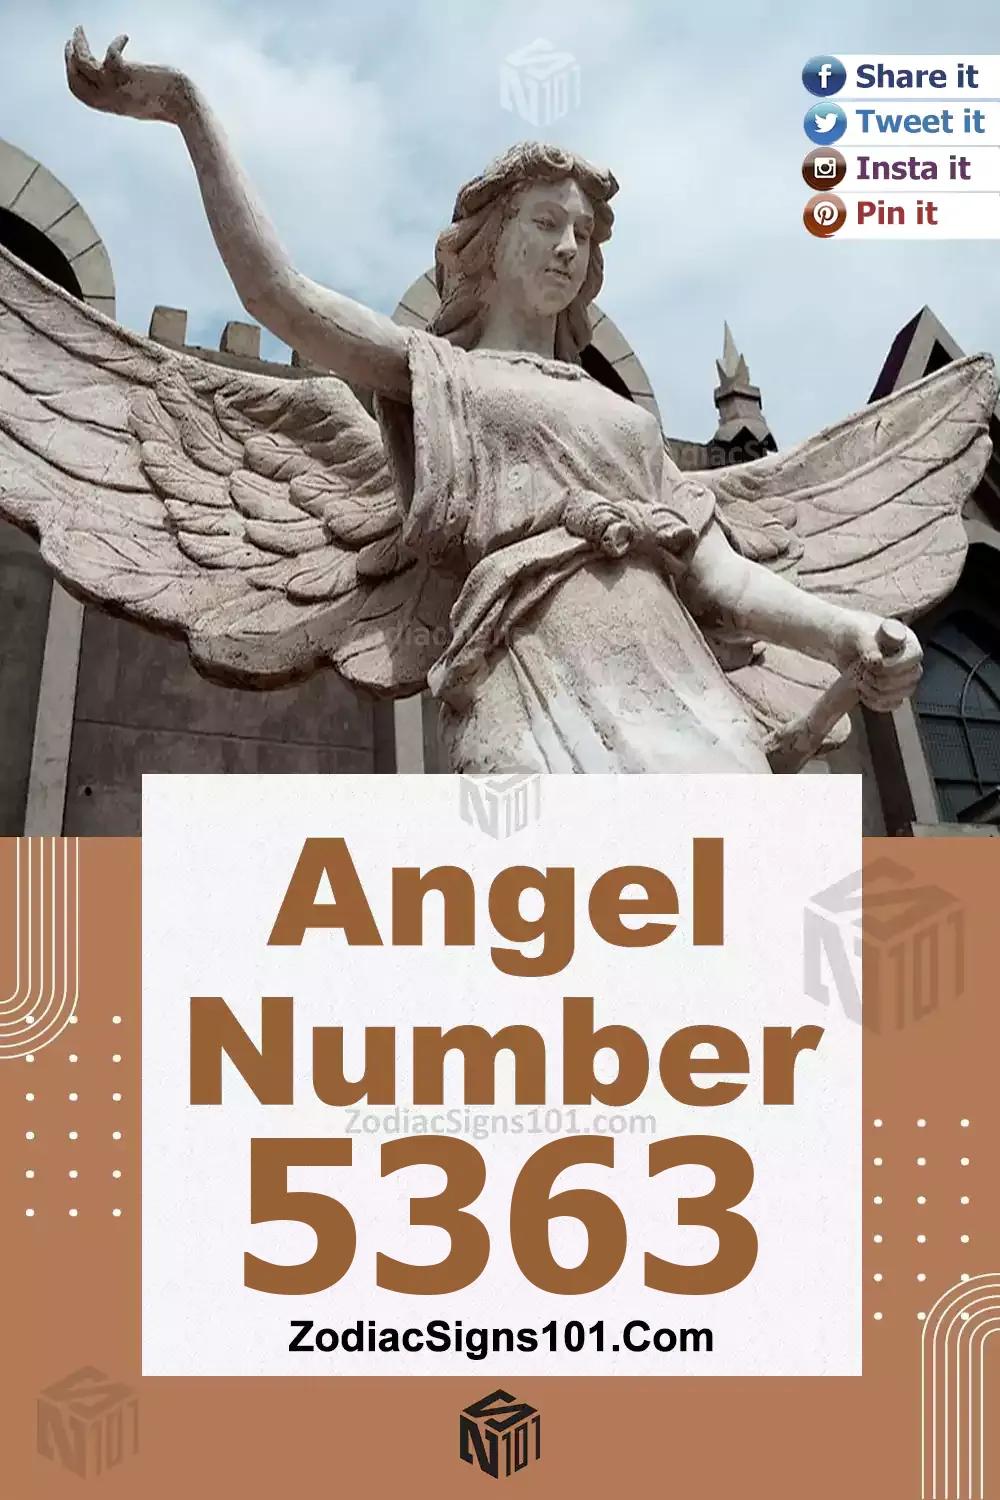 5363-Angel-Number-Meaning.jpg